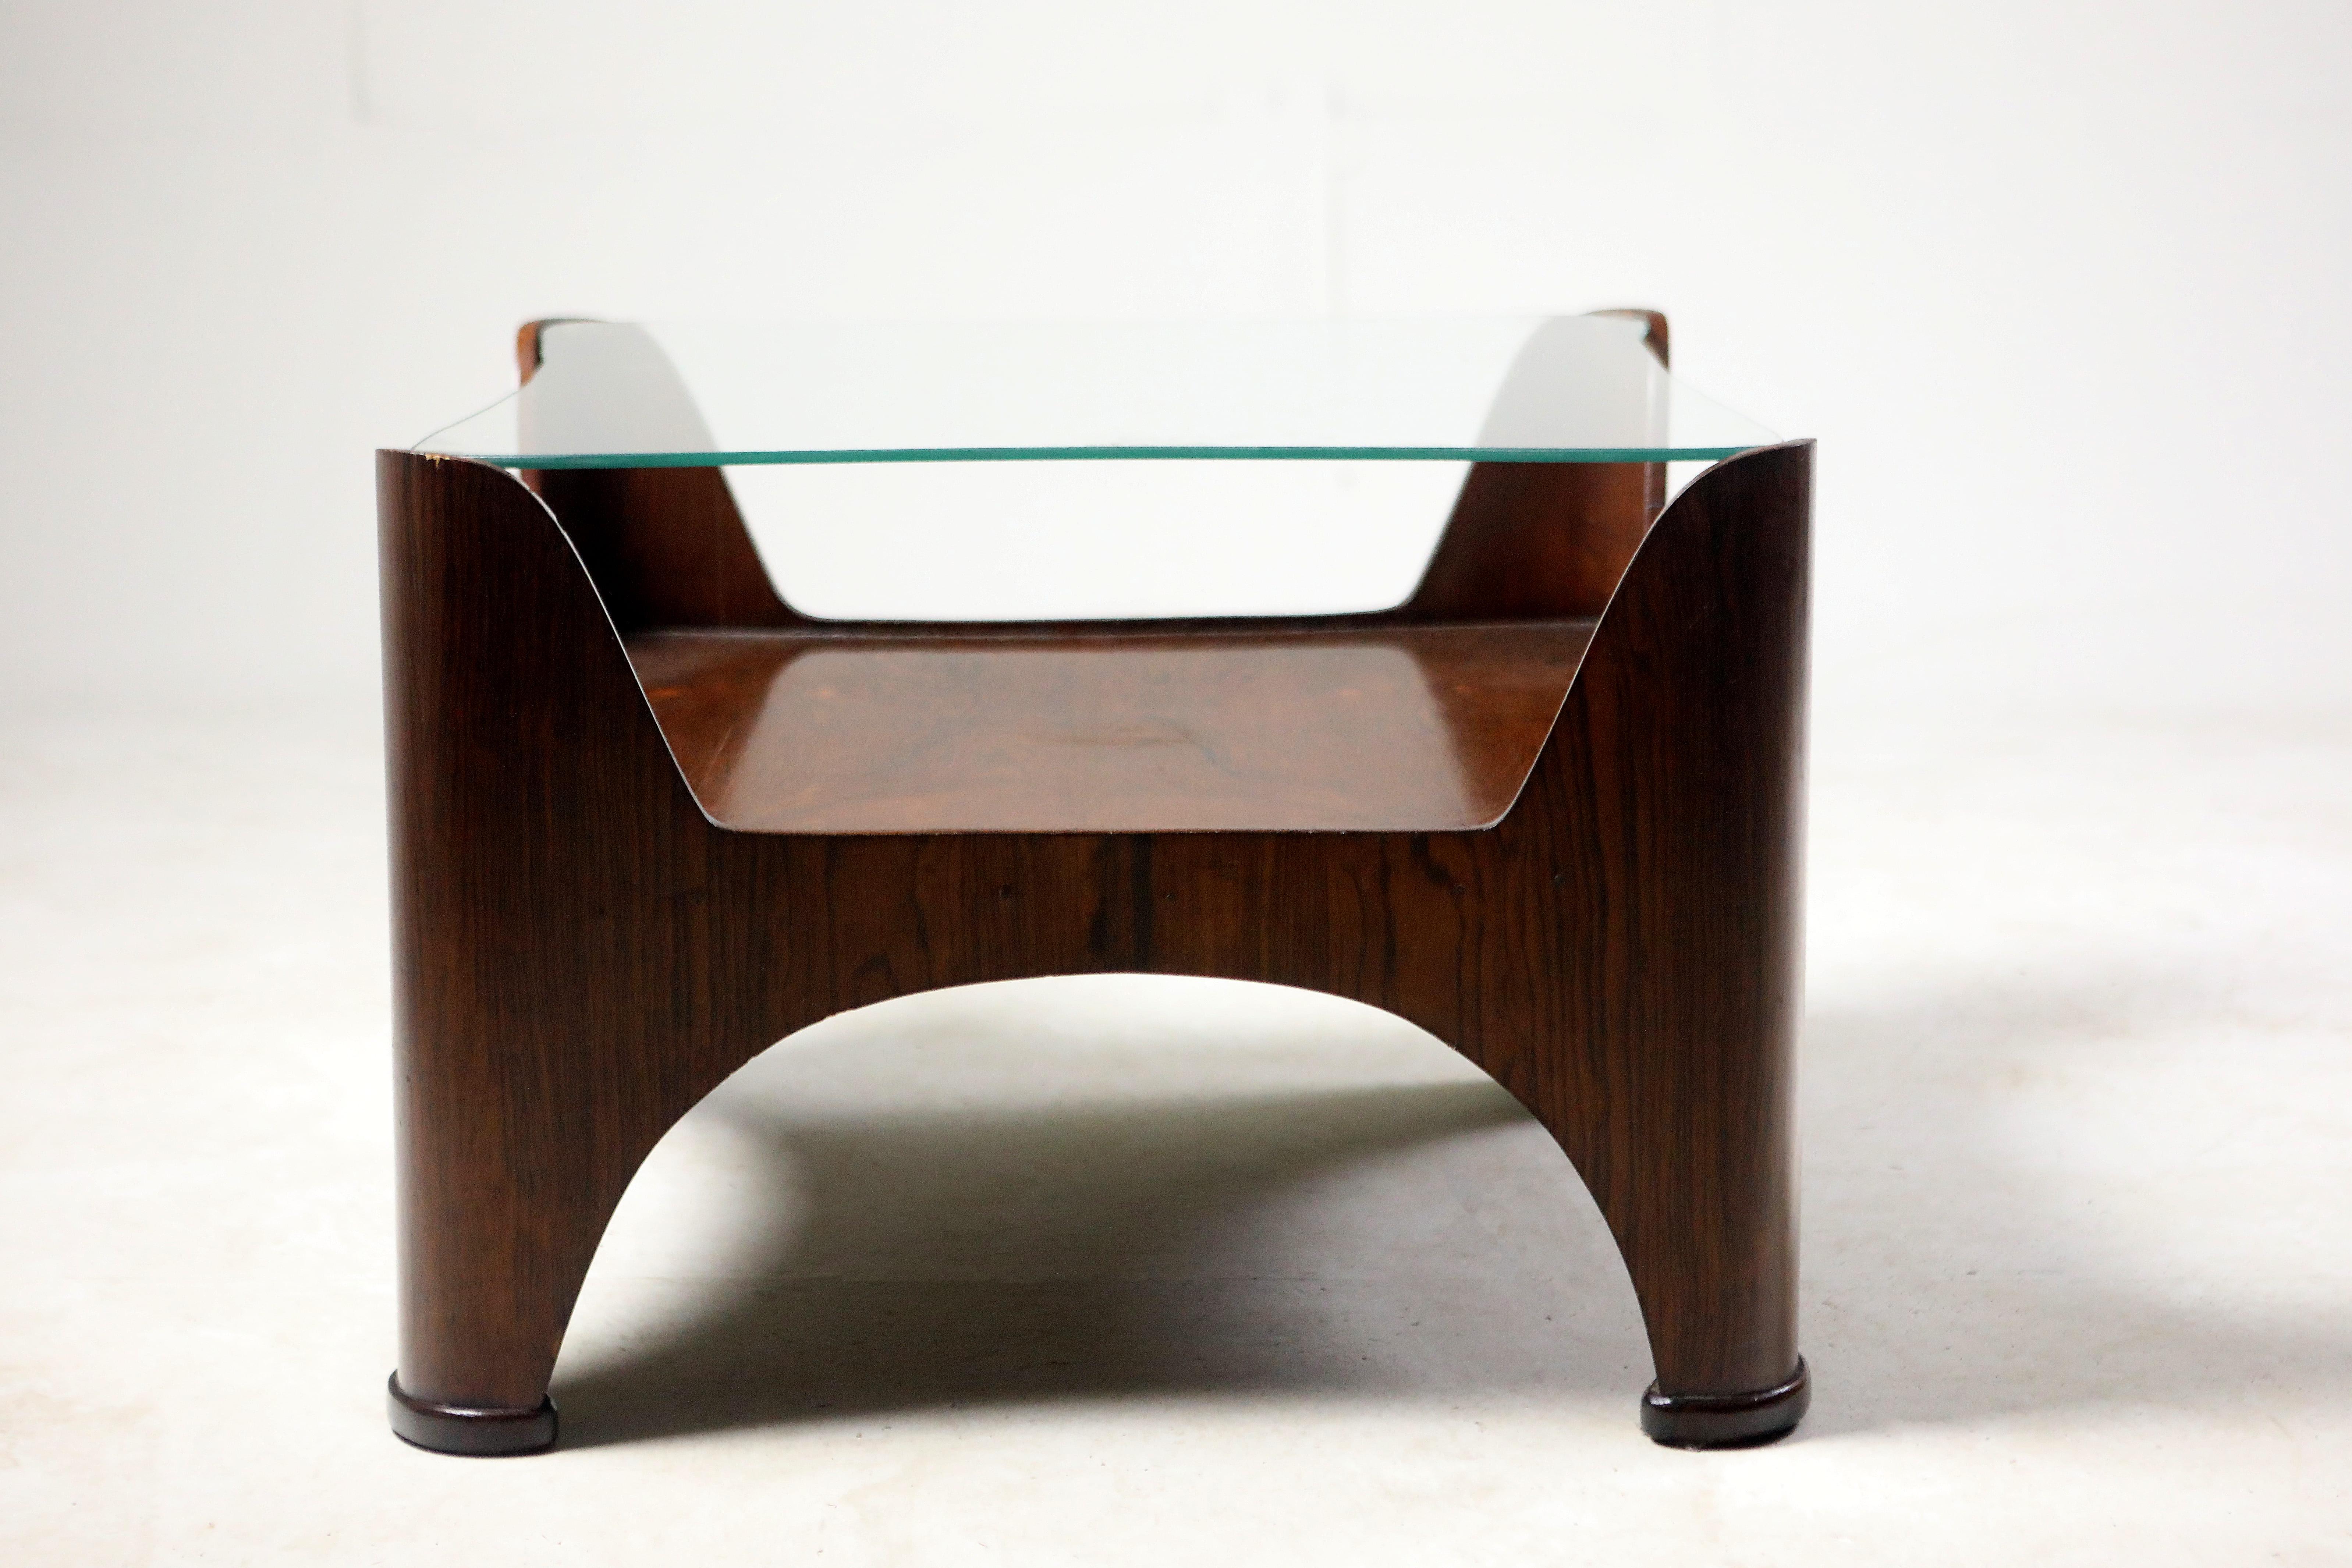 Varnished Mid-Century Modern Square Glass-Top Hardwood End Table, Brazil, 1960s For Sale